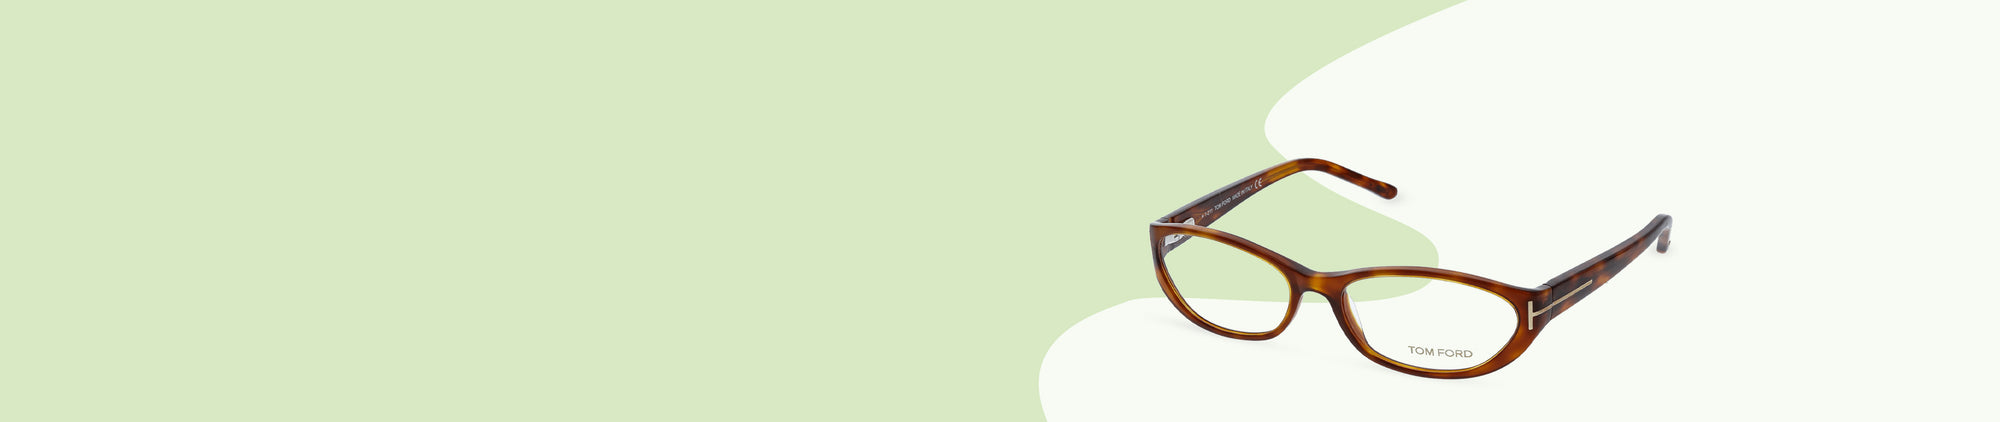 Frame Shape: Oval Glasses